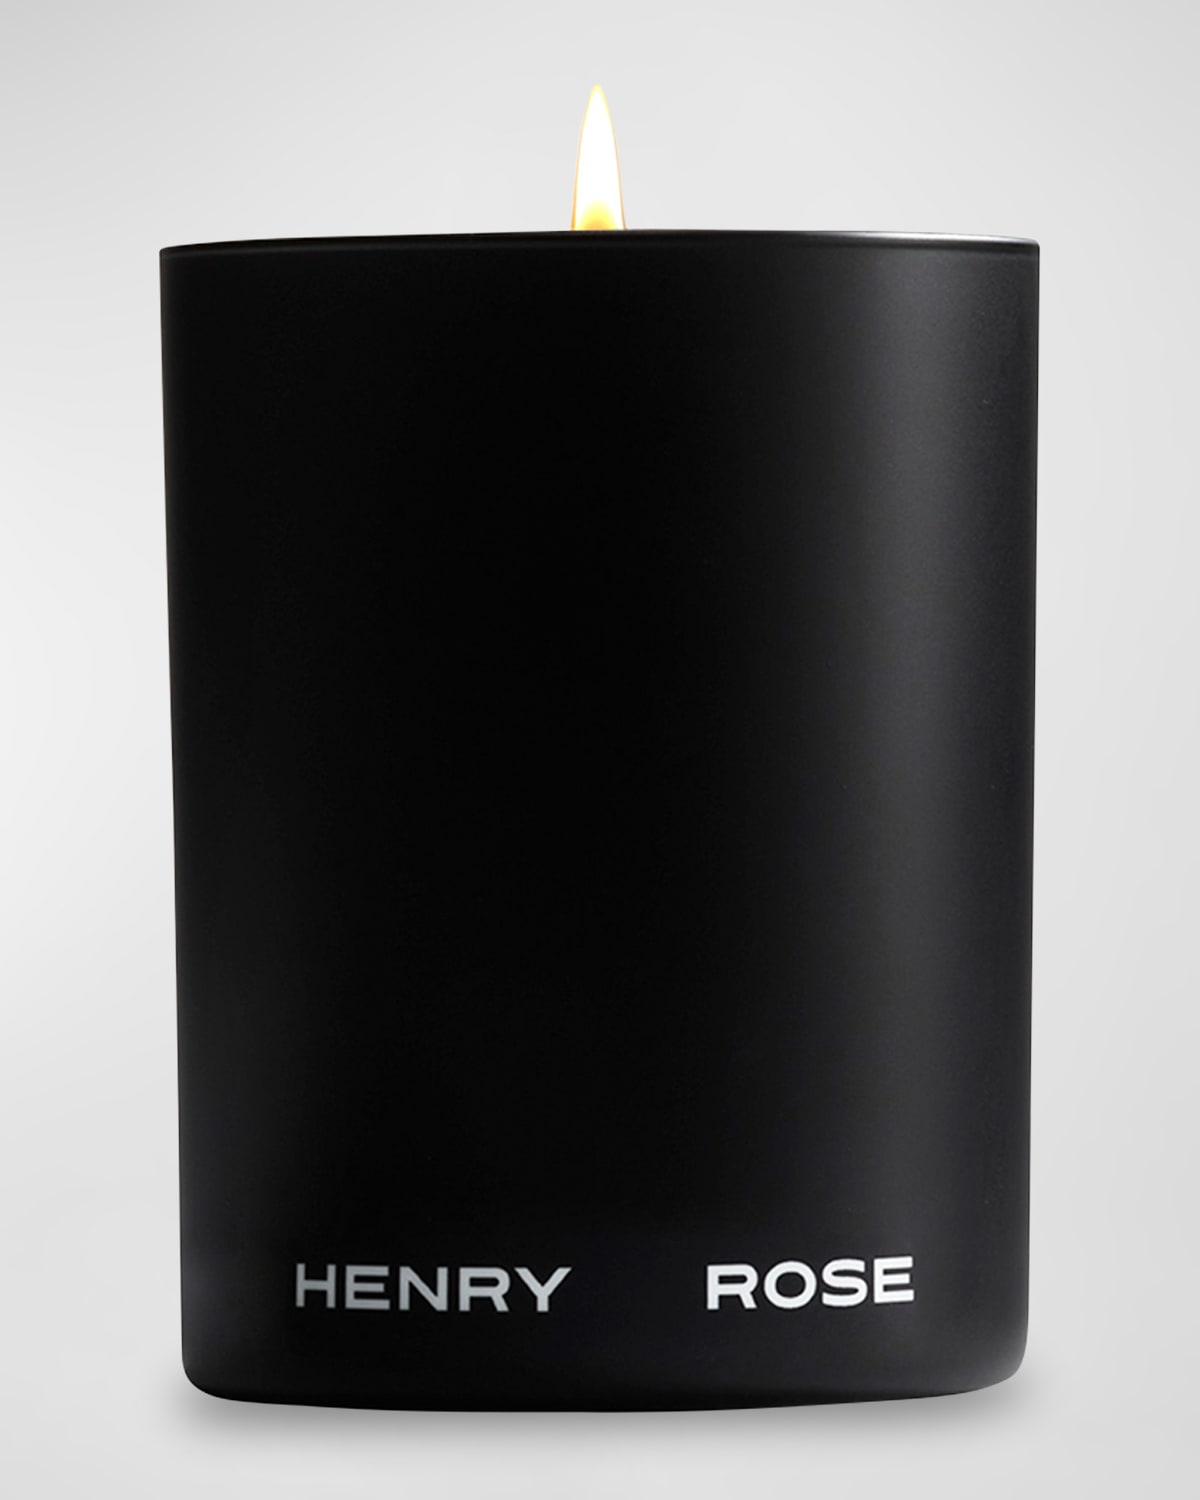 HENRY ROSE 10.5 OZ. LAST LIGHT CANDLE